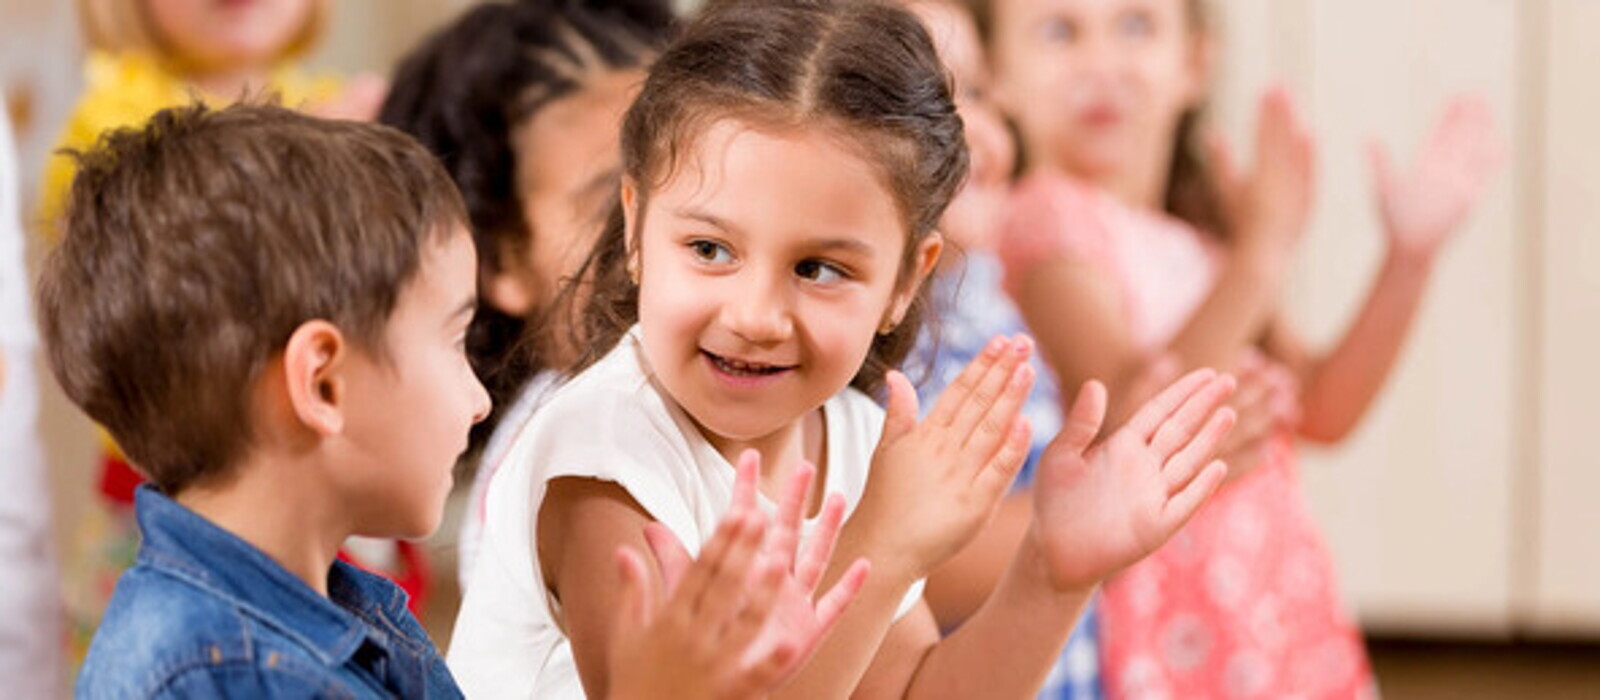 Making Friends: Kindergarten and socio-emotional development